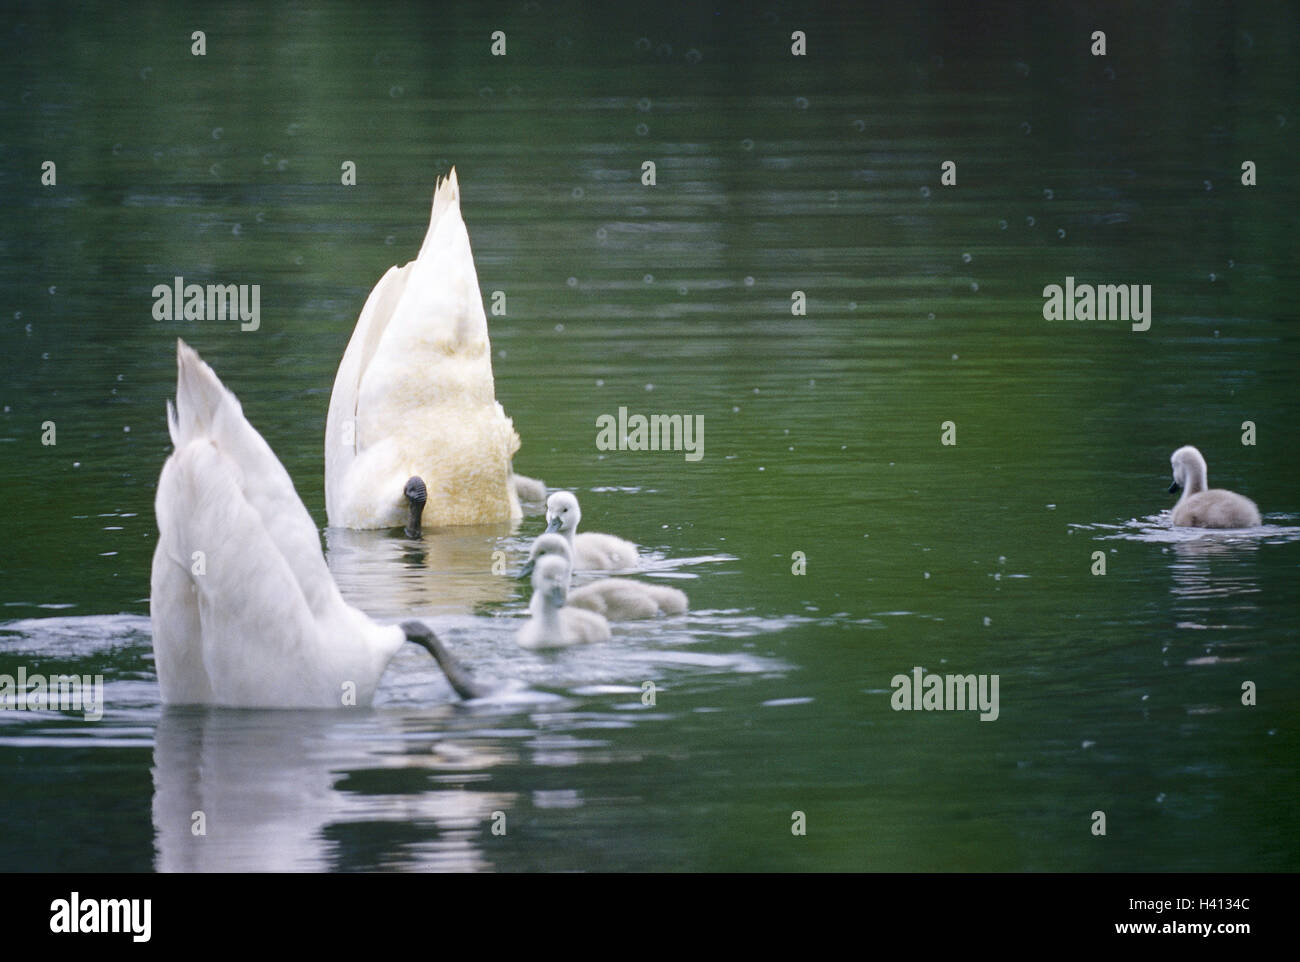 Lake, swans, Cygnus, Gründeln, chicks, swim, waters, habitat, nature, animals, birds, animal family, young animals, food search, under water Stock Photo